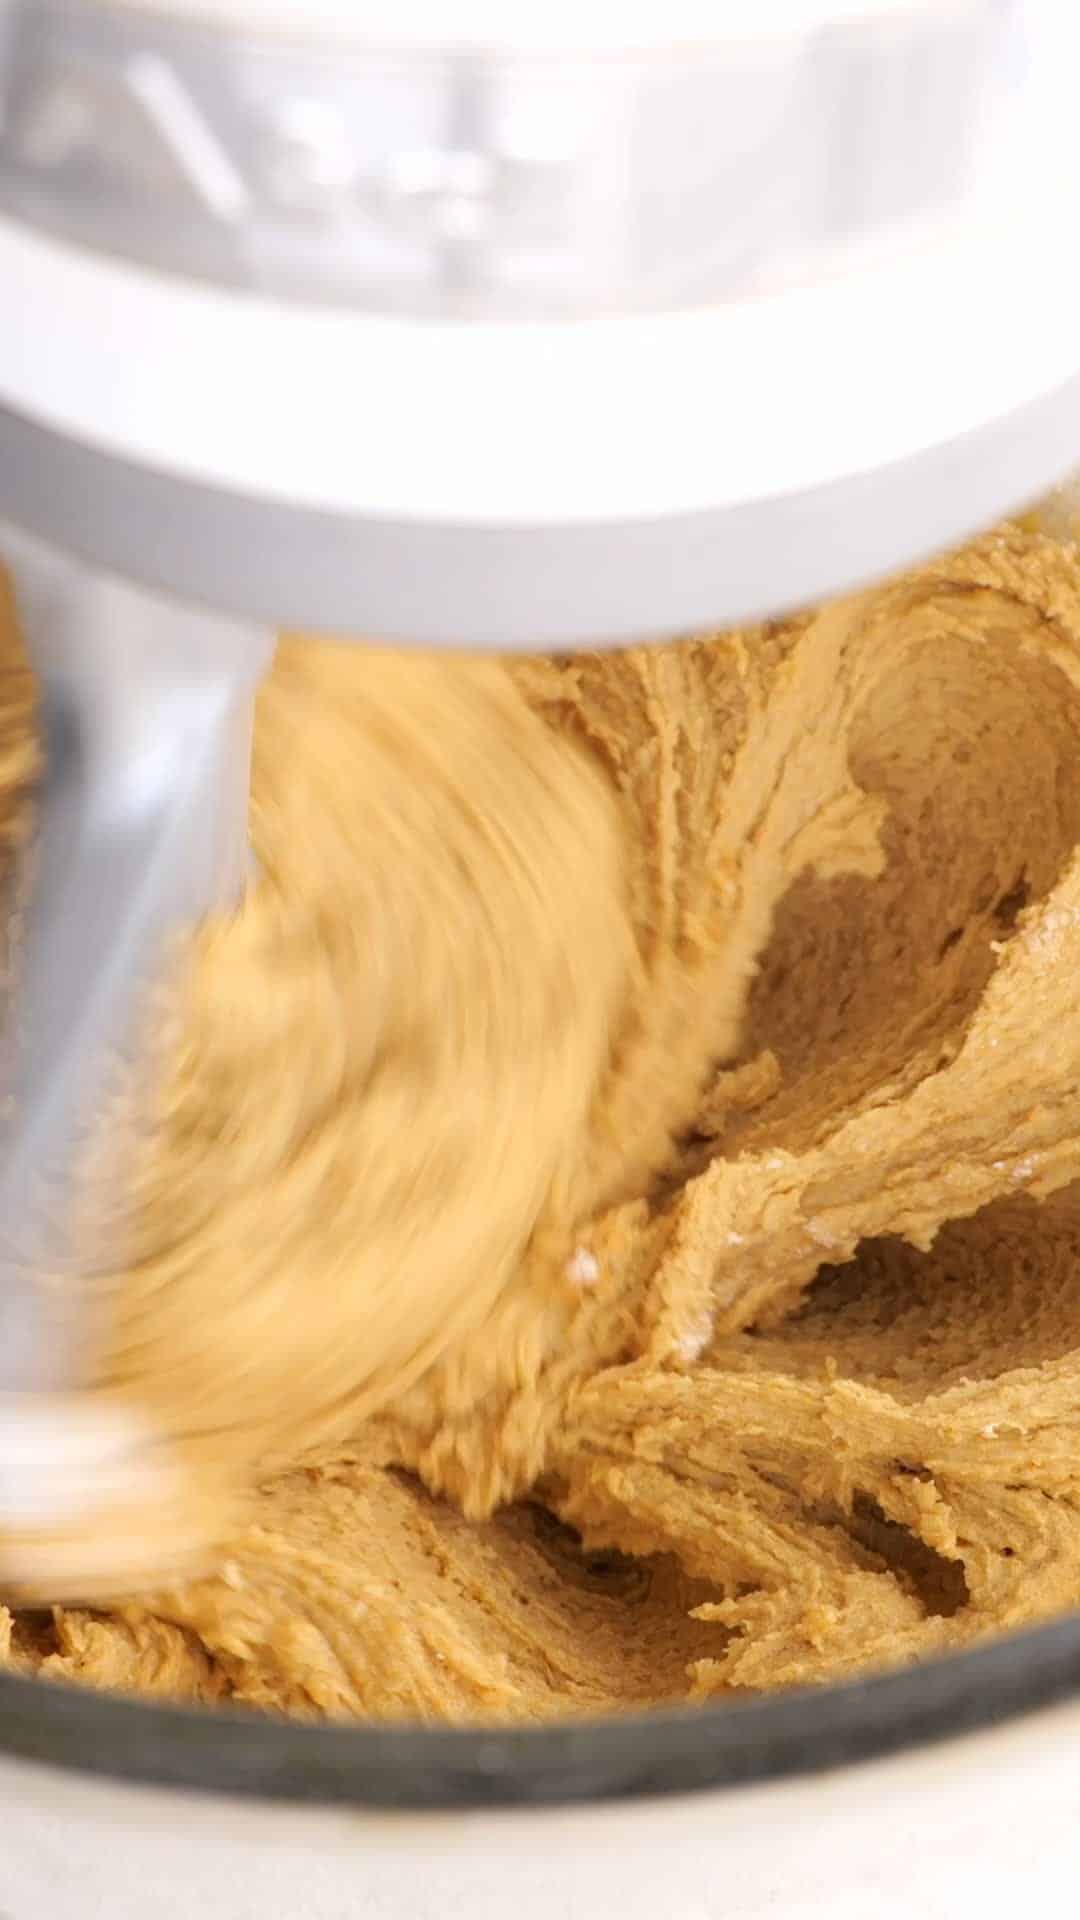 Peanut butter cookie dough being beaten in a stand mixer